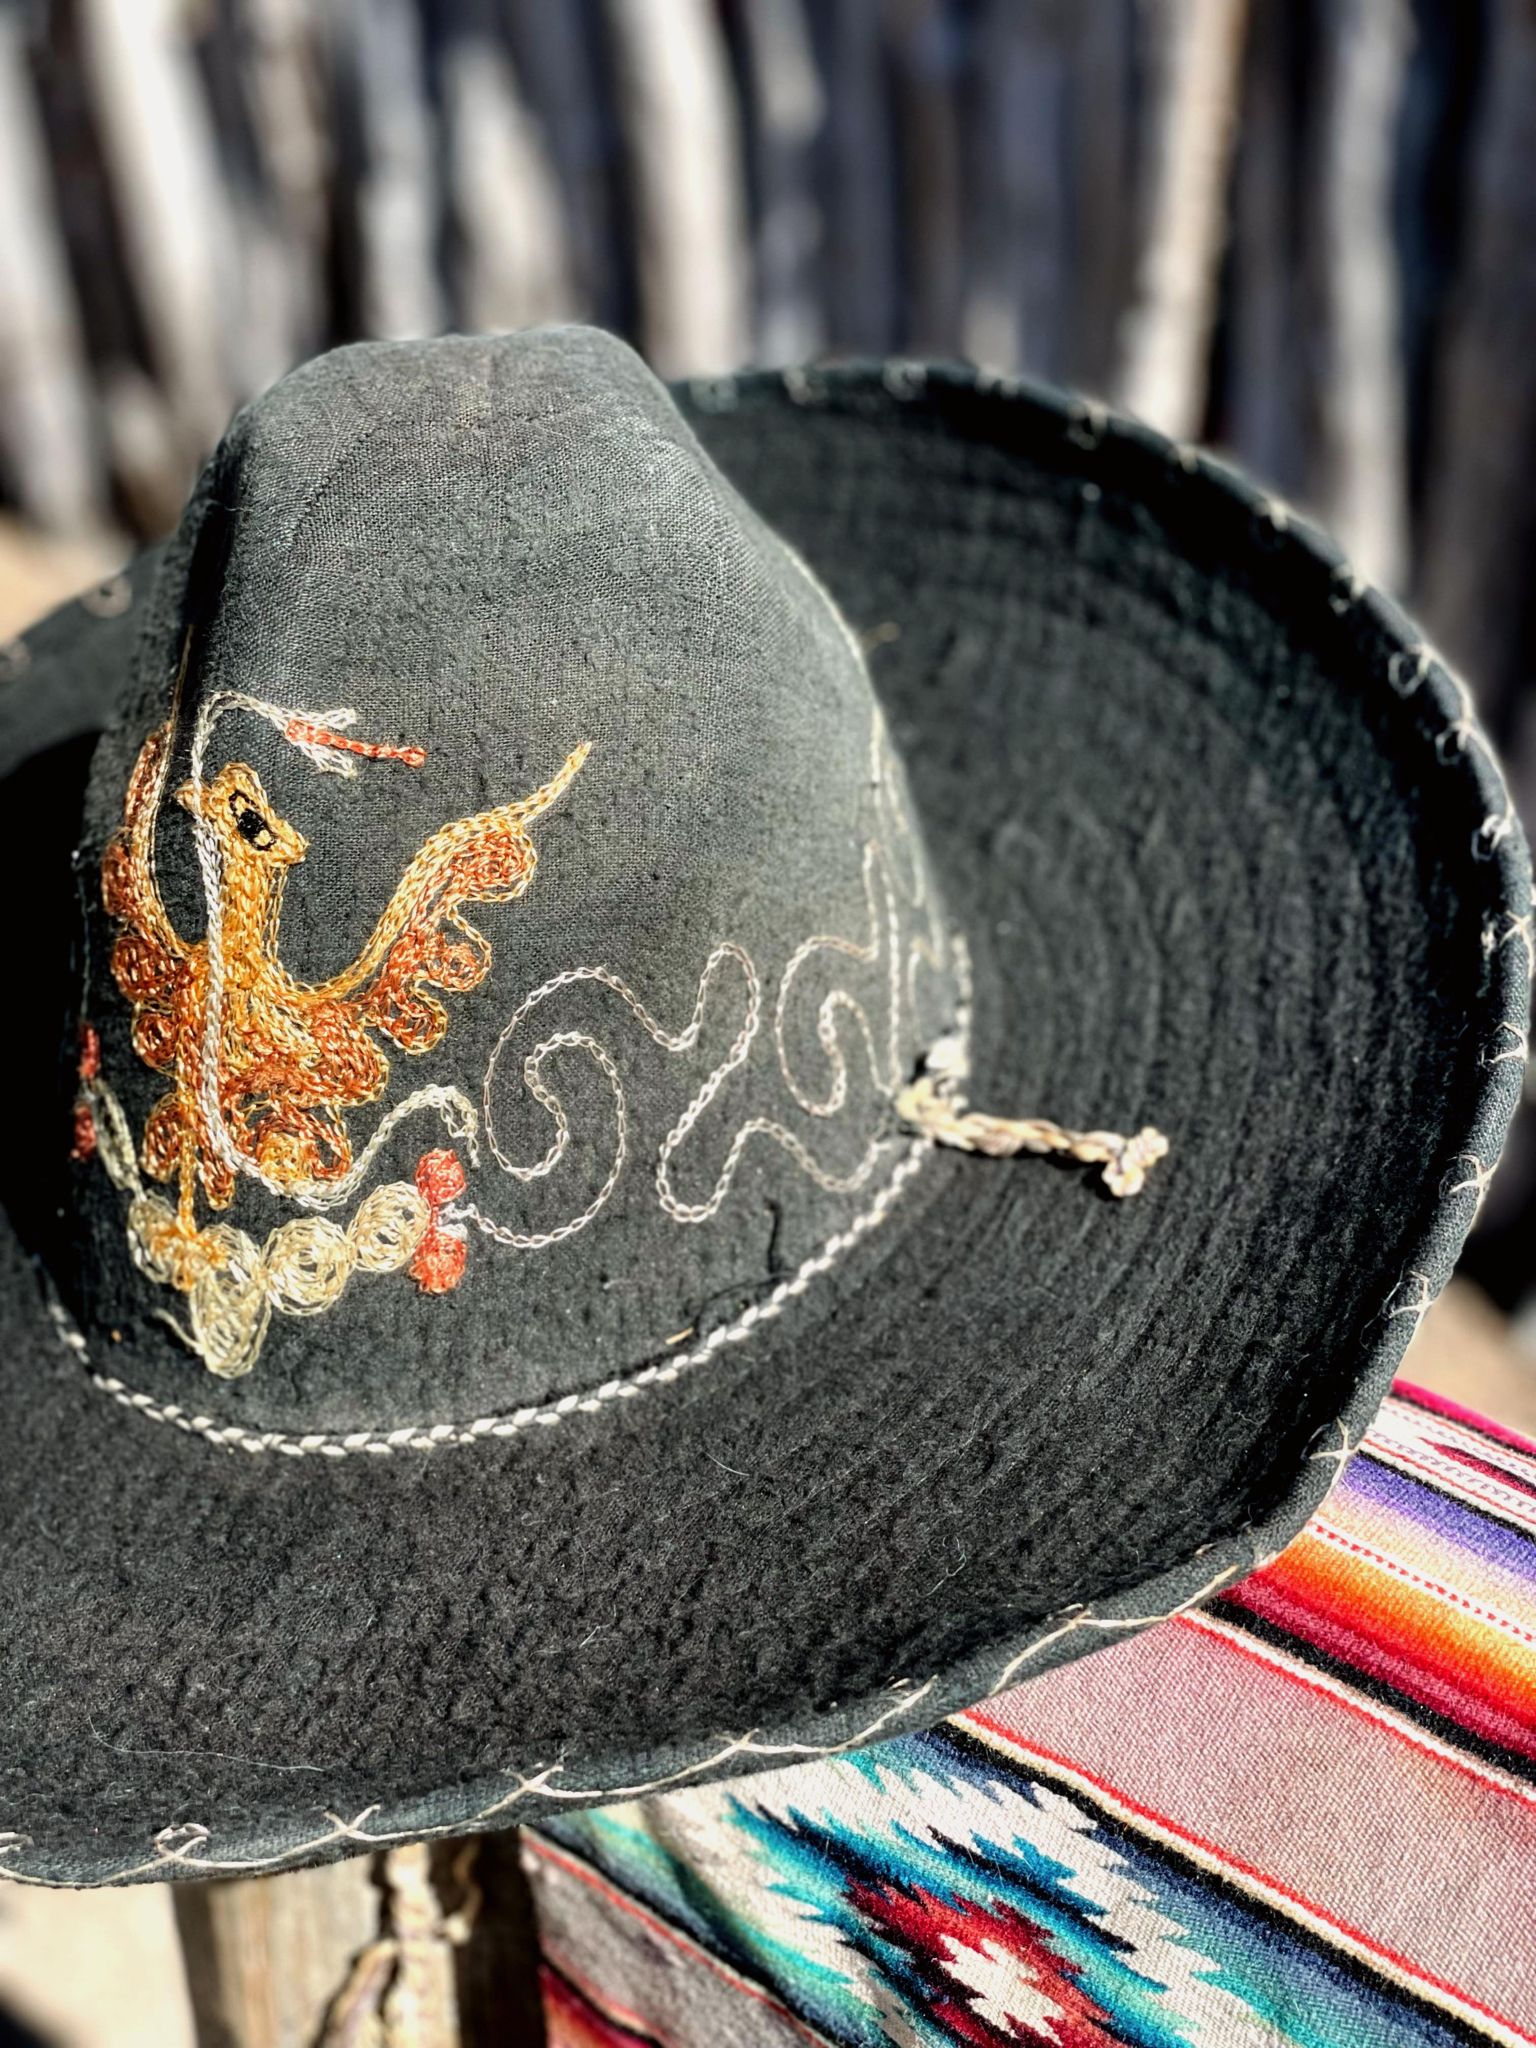 1930's Mexican Sombrero